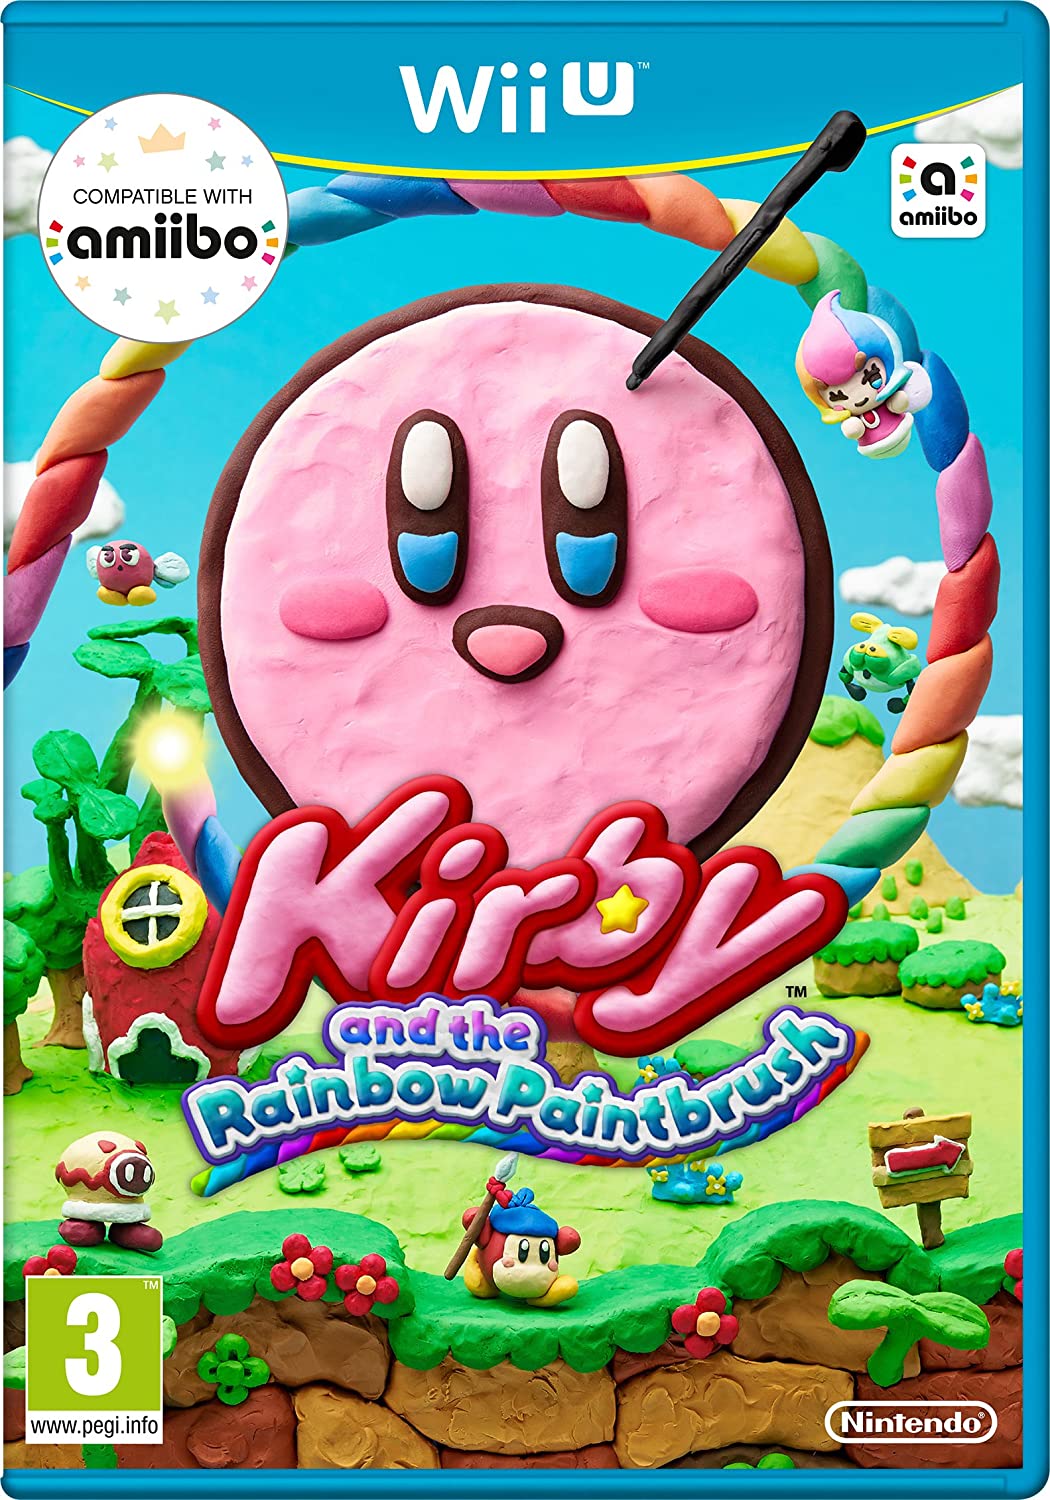 Kirby and the Rainbow Paintbrush (Nintendo Wii U)